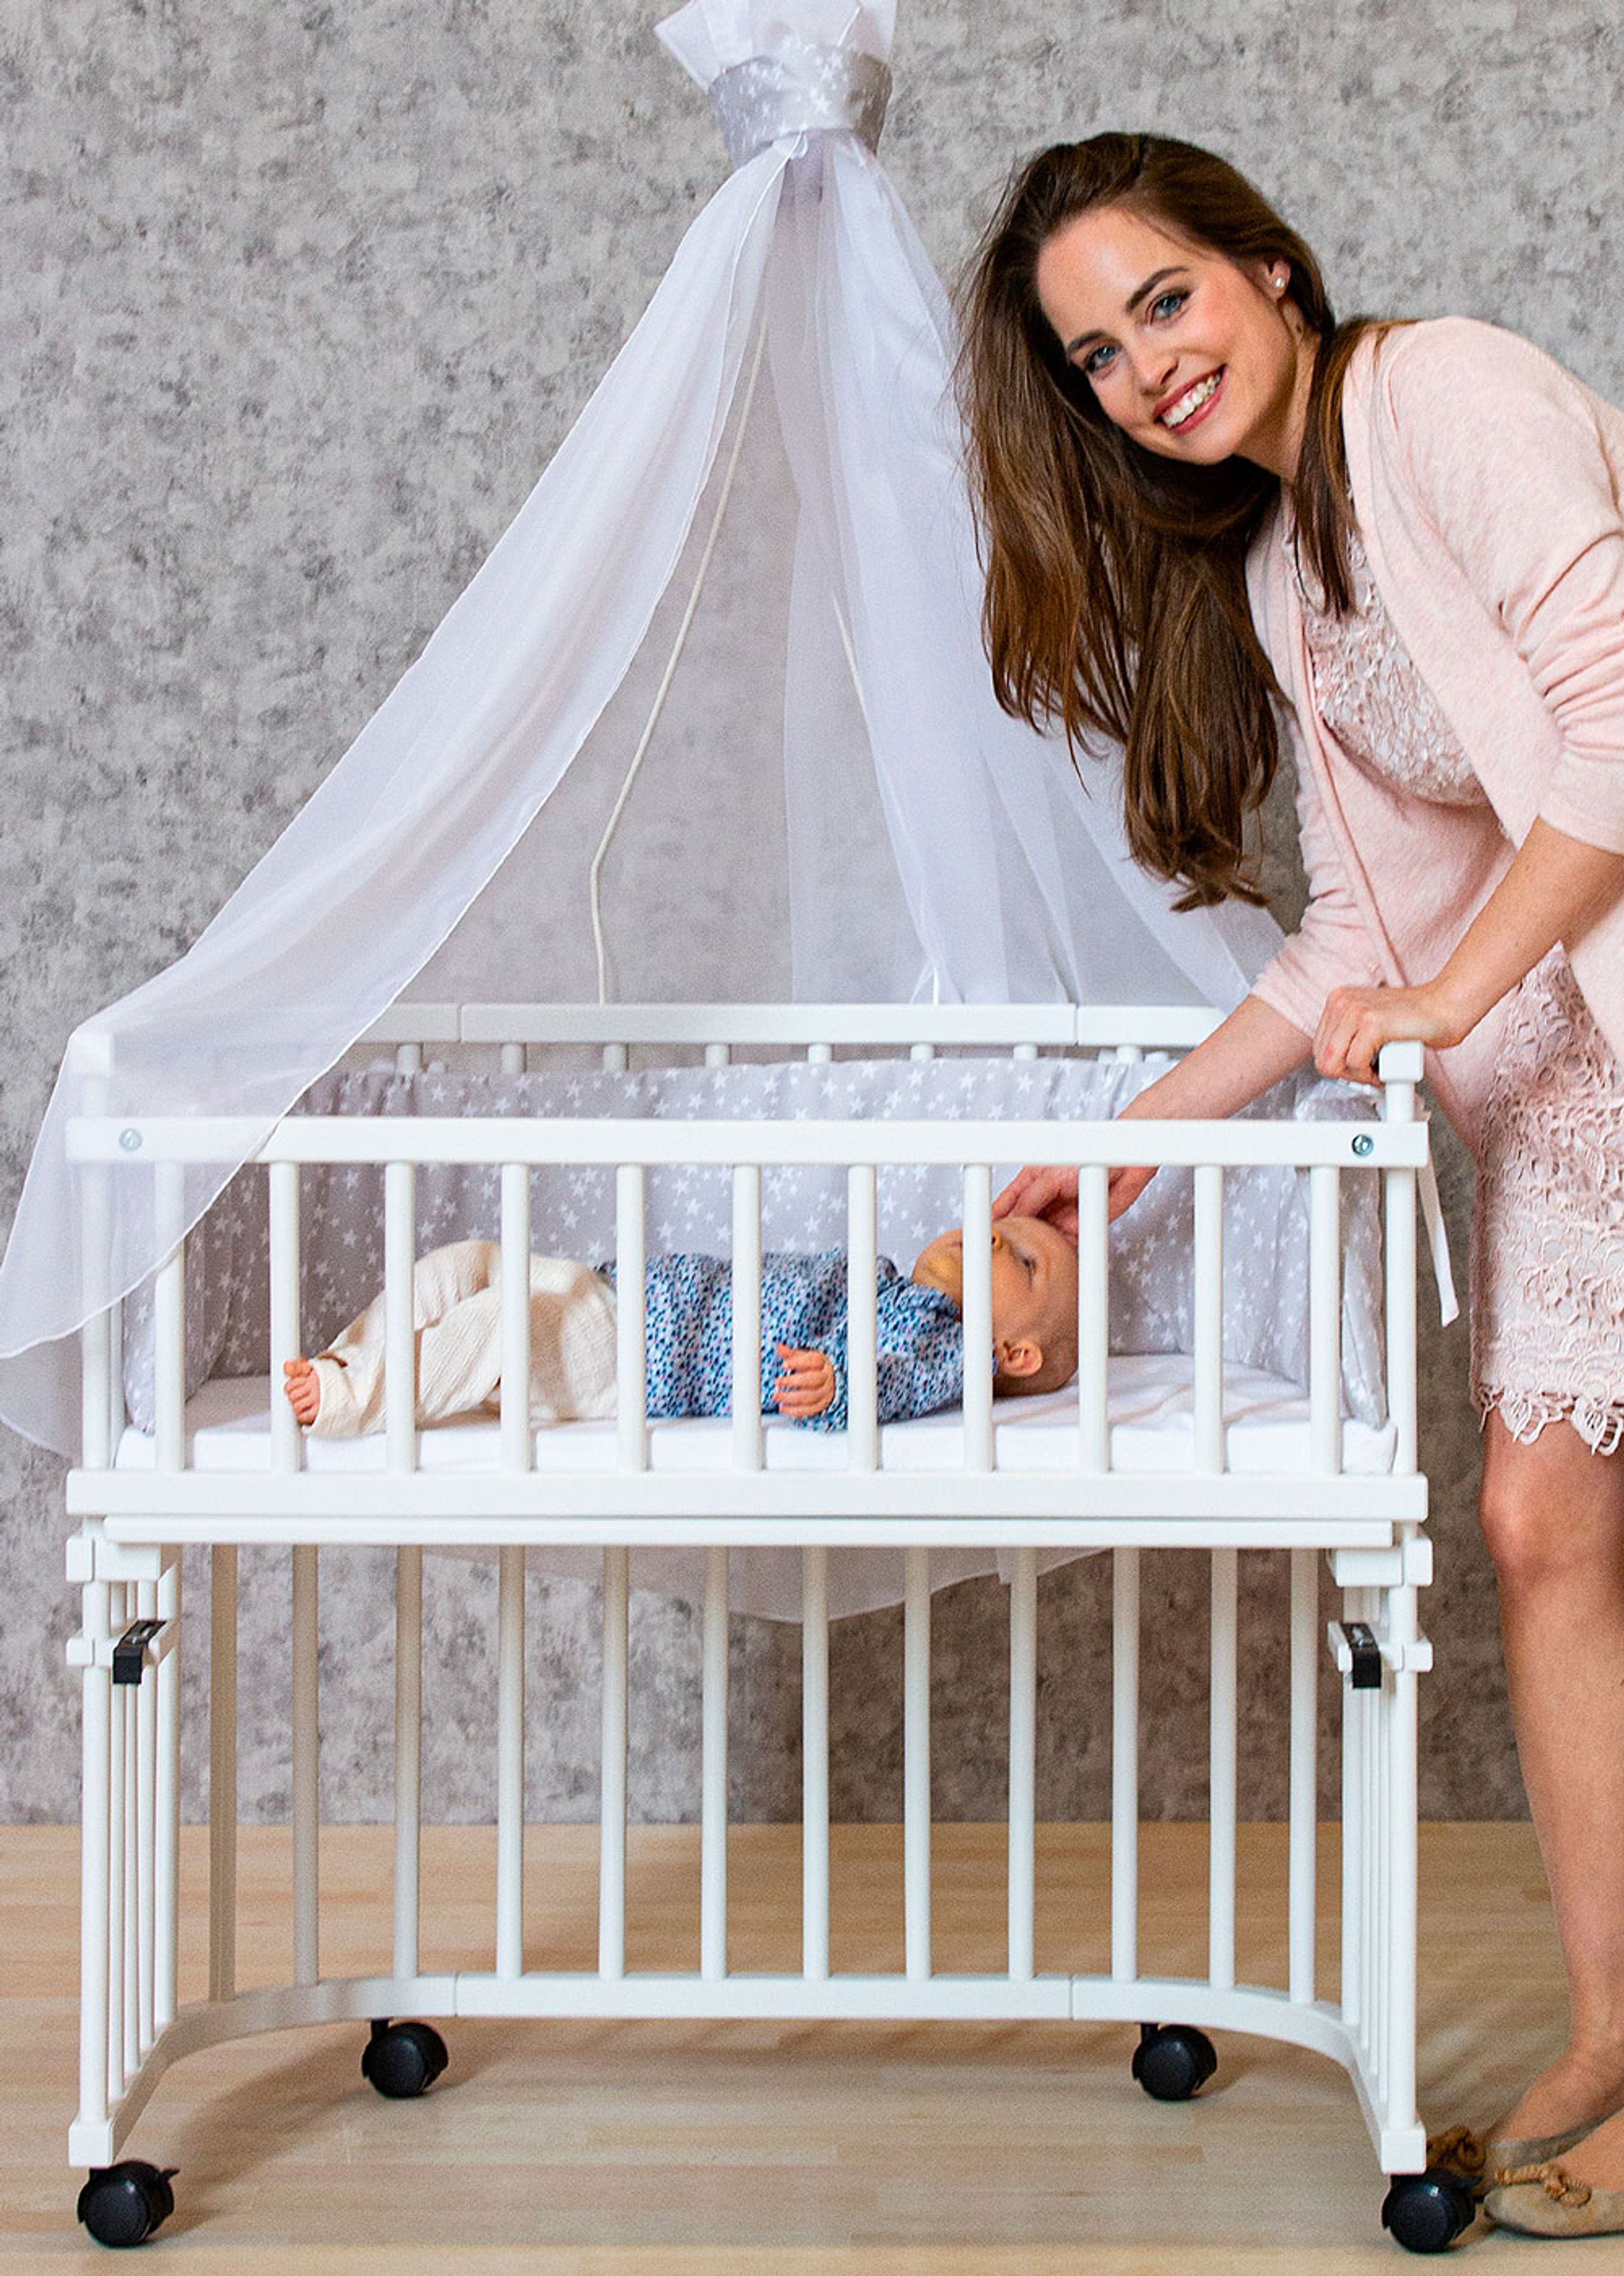 Babybay - Bedside Crib - Babybay - Original Co-Sleeper - White Varnished